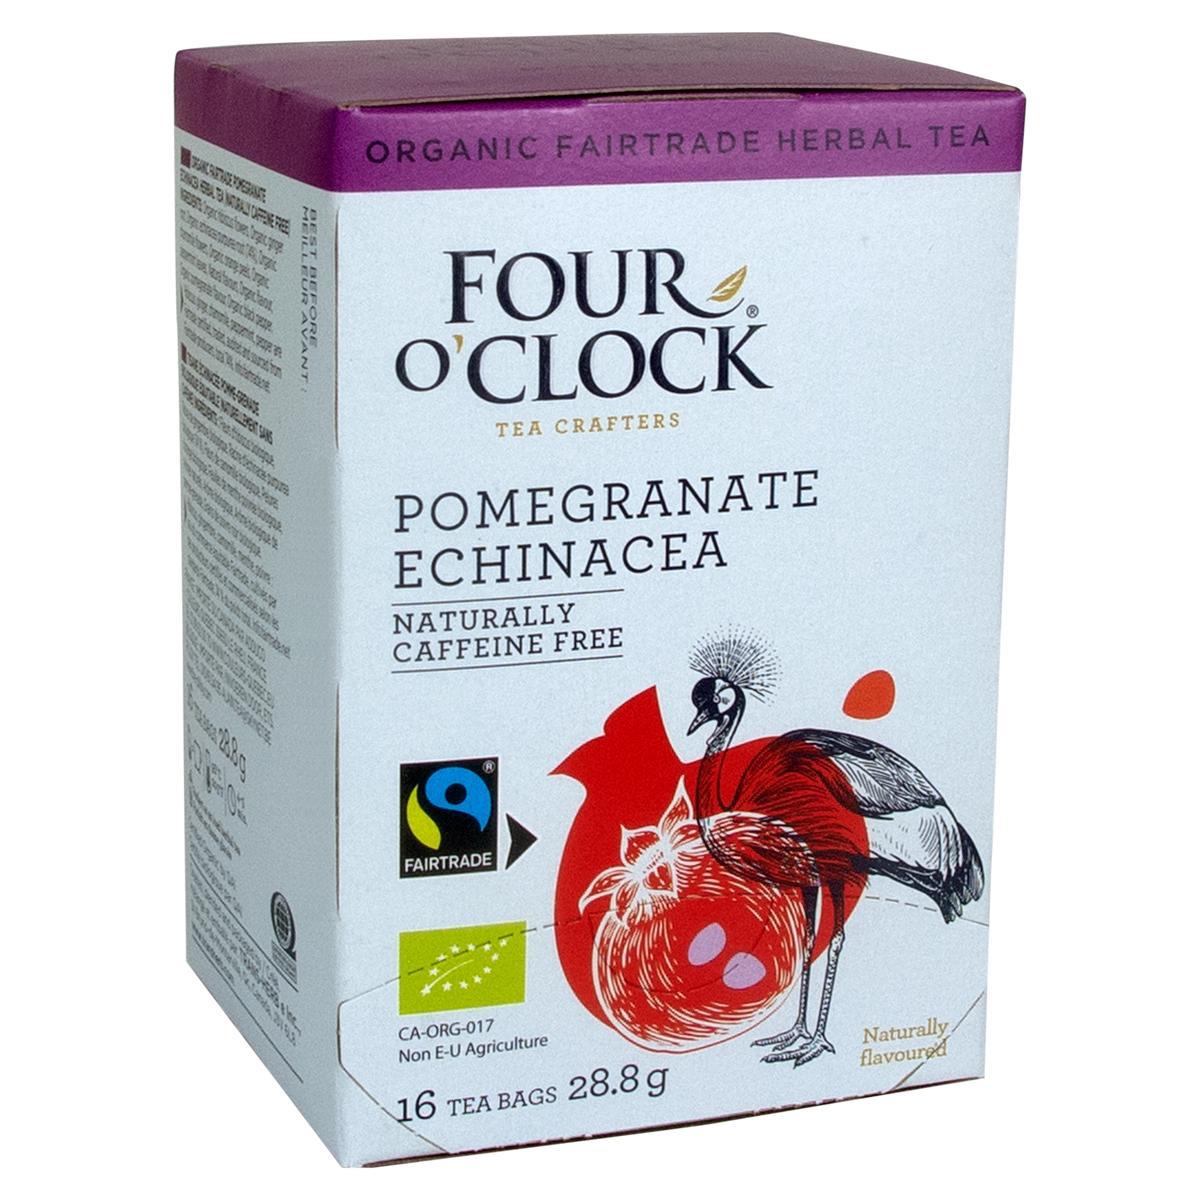 Four O’Clock's Four O'Clock POMEGRANATE ECHINACEA'